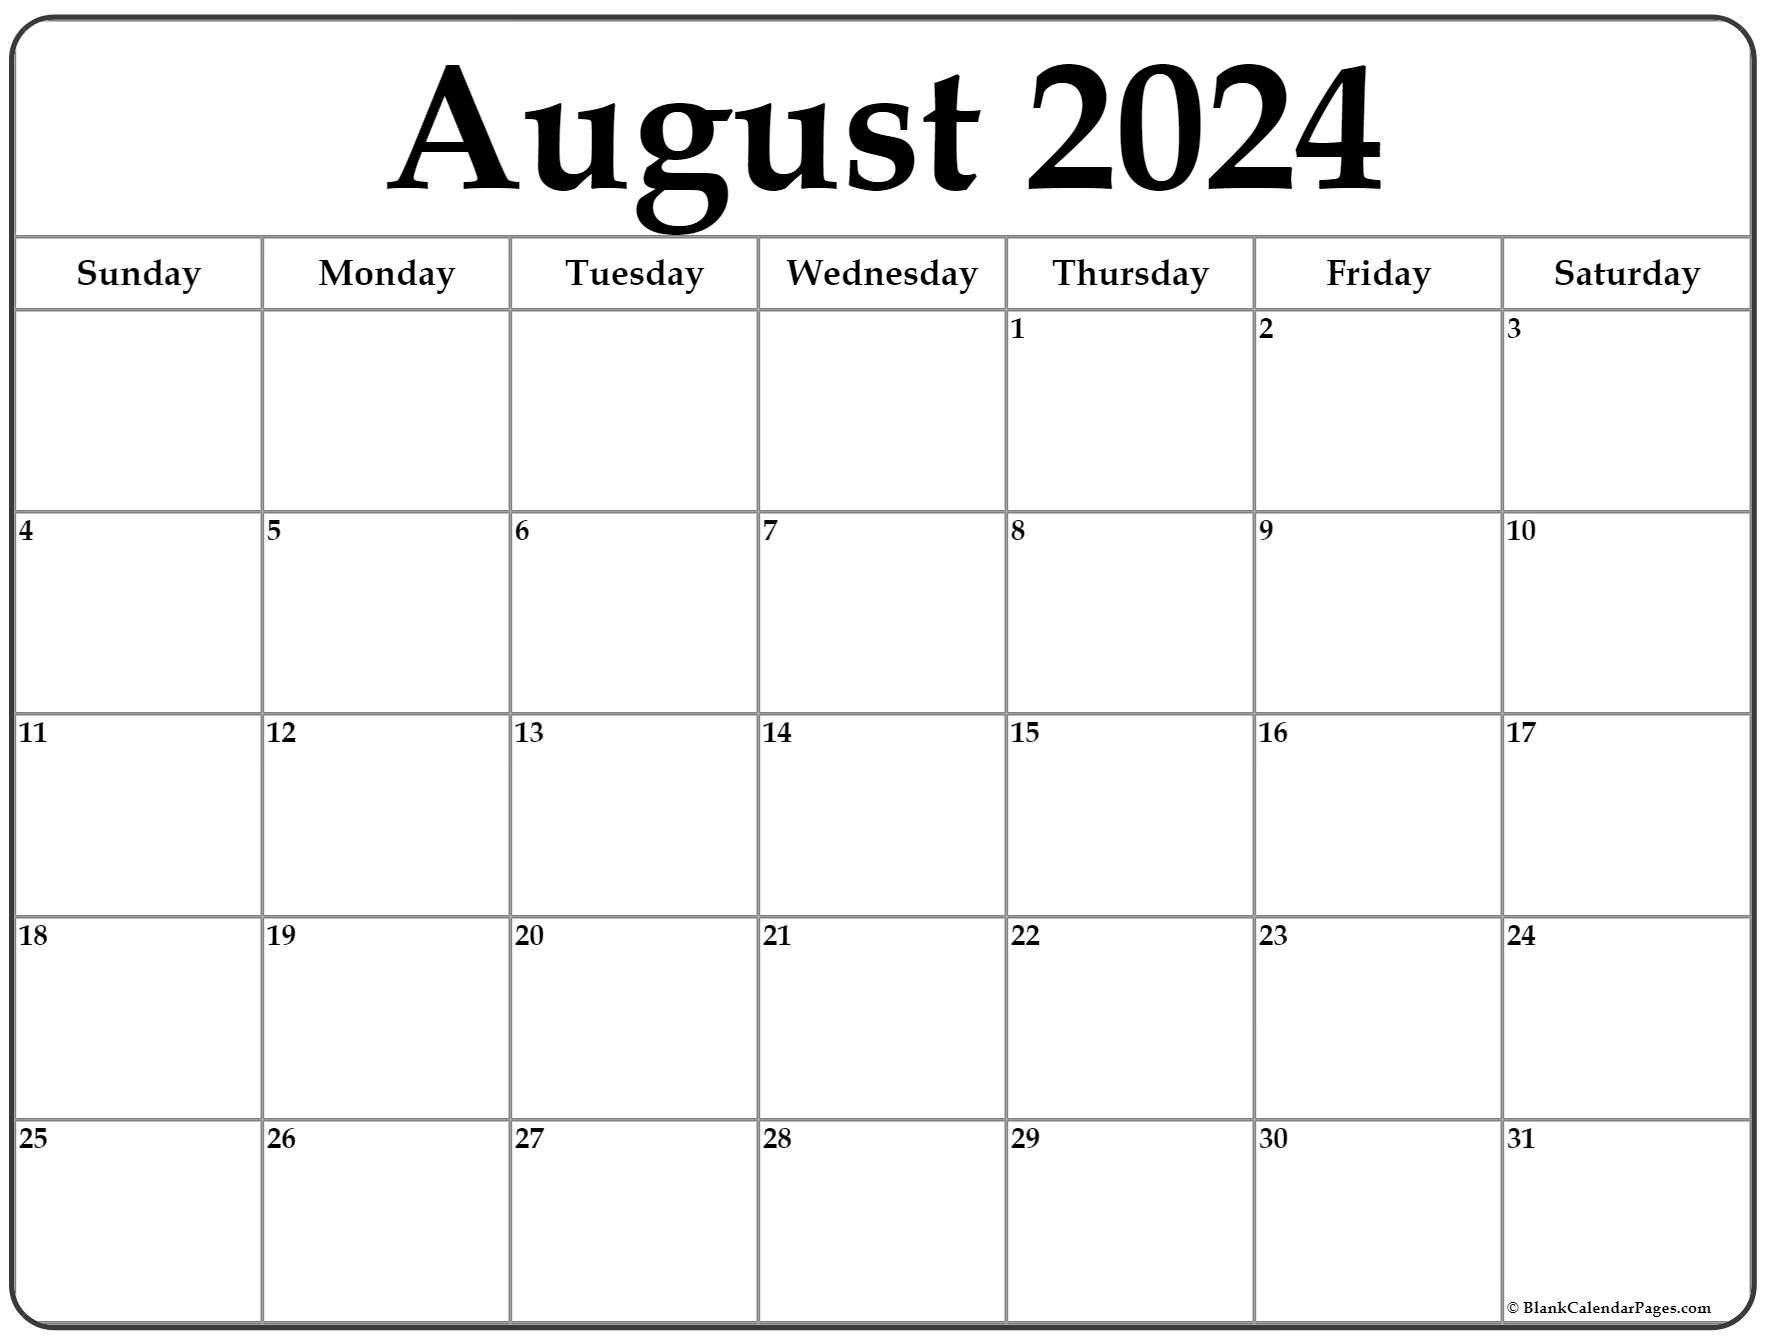 Pdf Calendar August 2022 August 2022 Calendar | Free Printable Calendar Templates